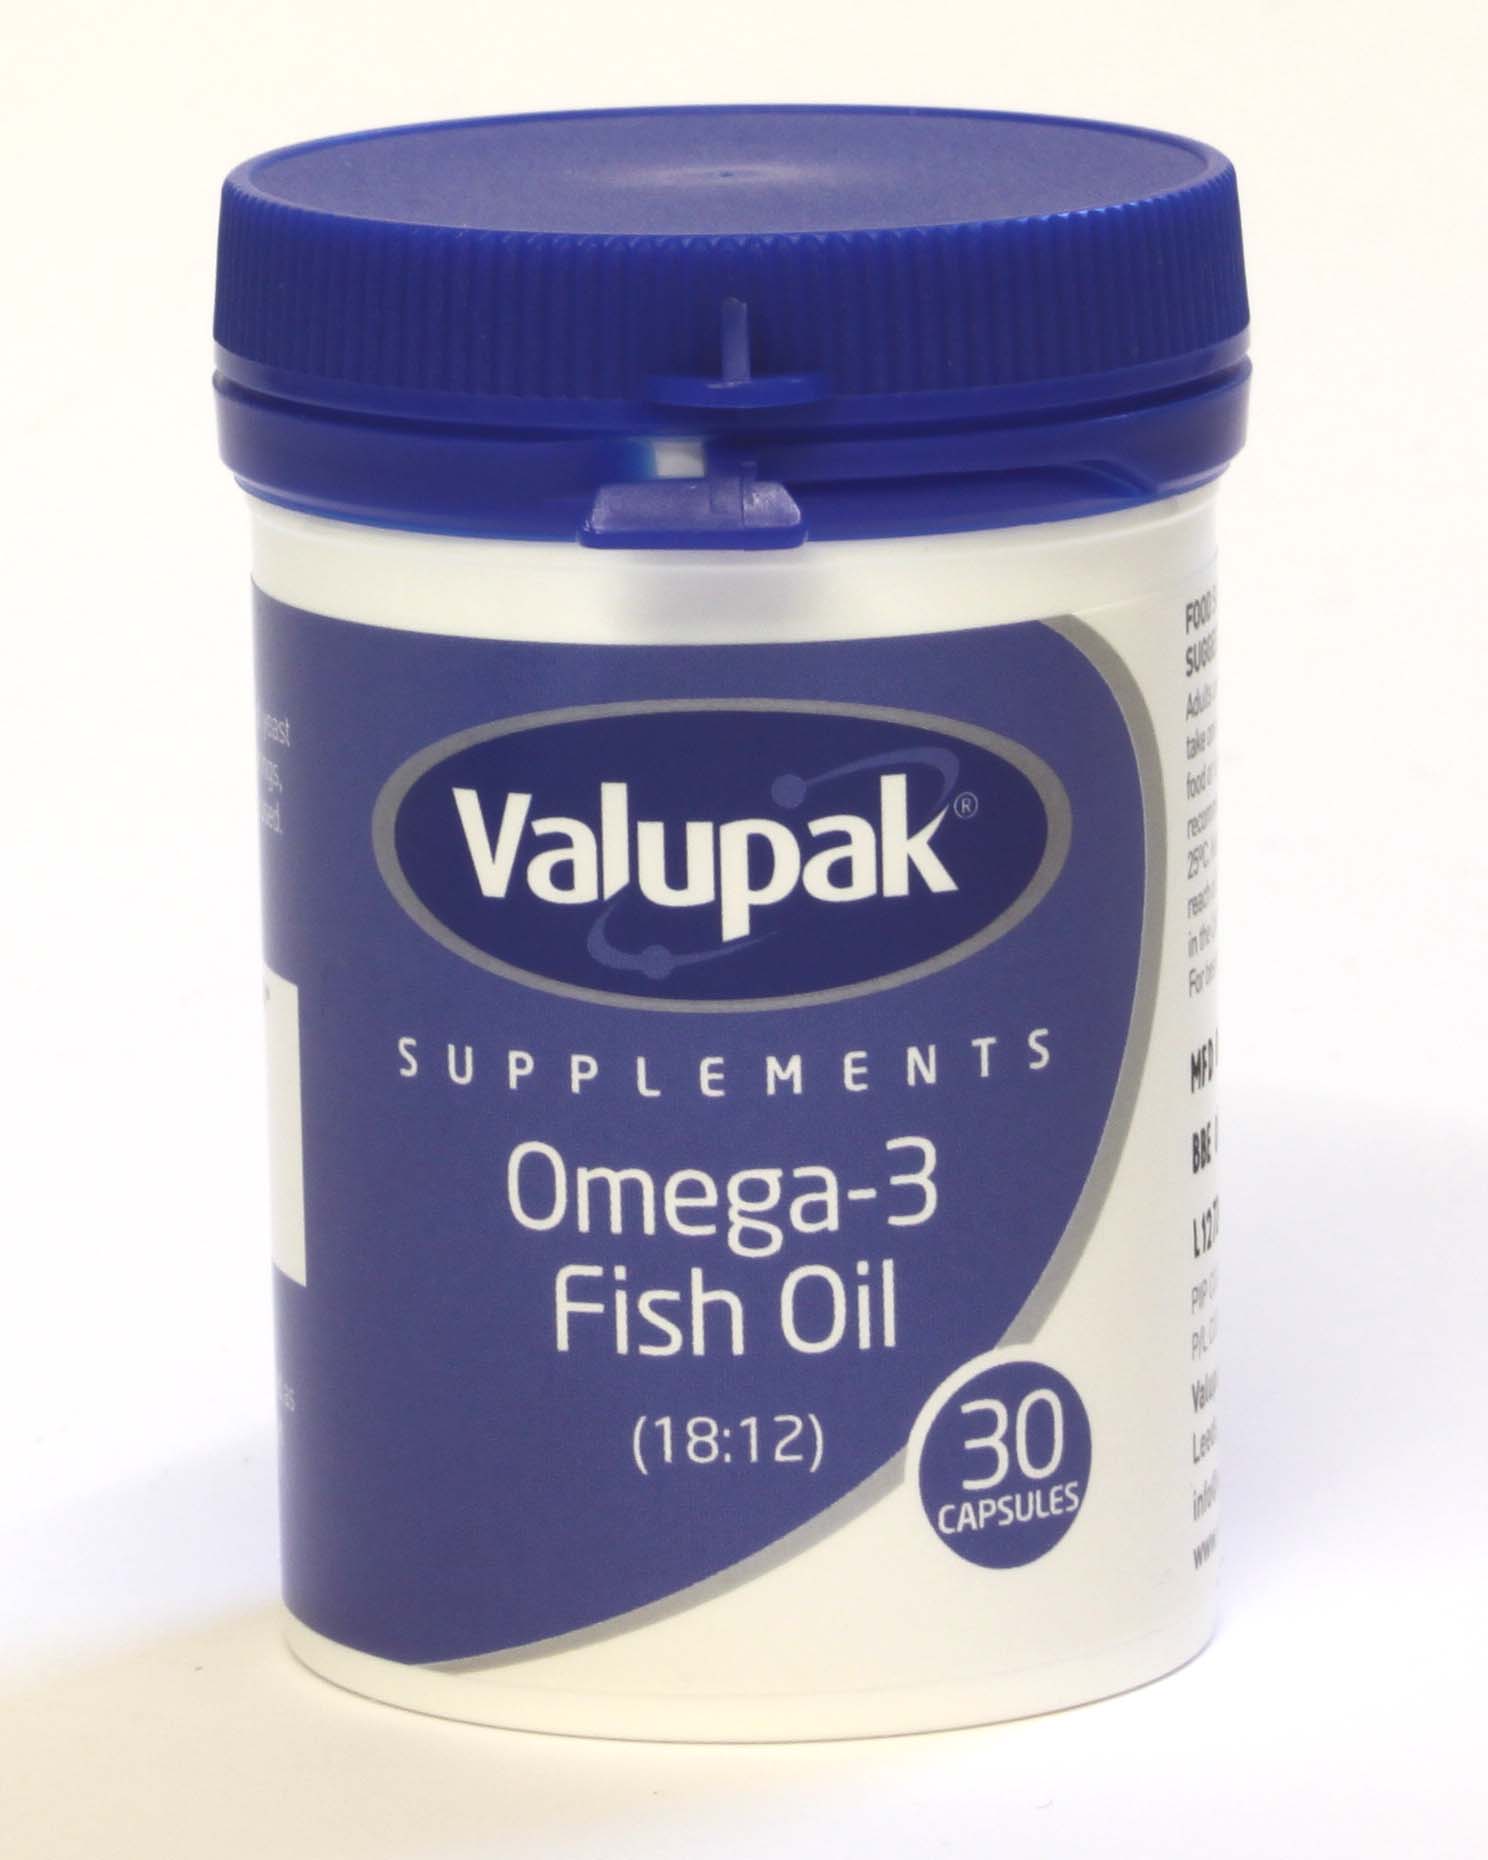 Valupak Omega 3 Fish Oil - 30 Capsules